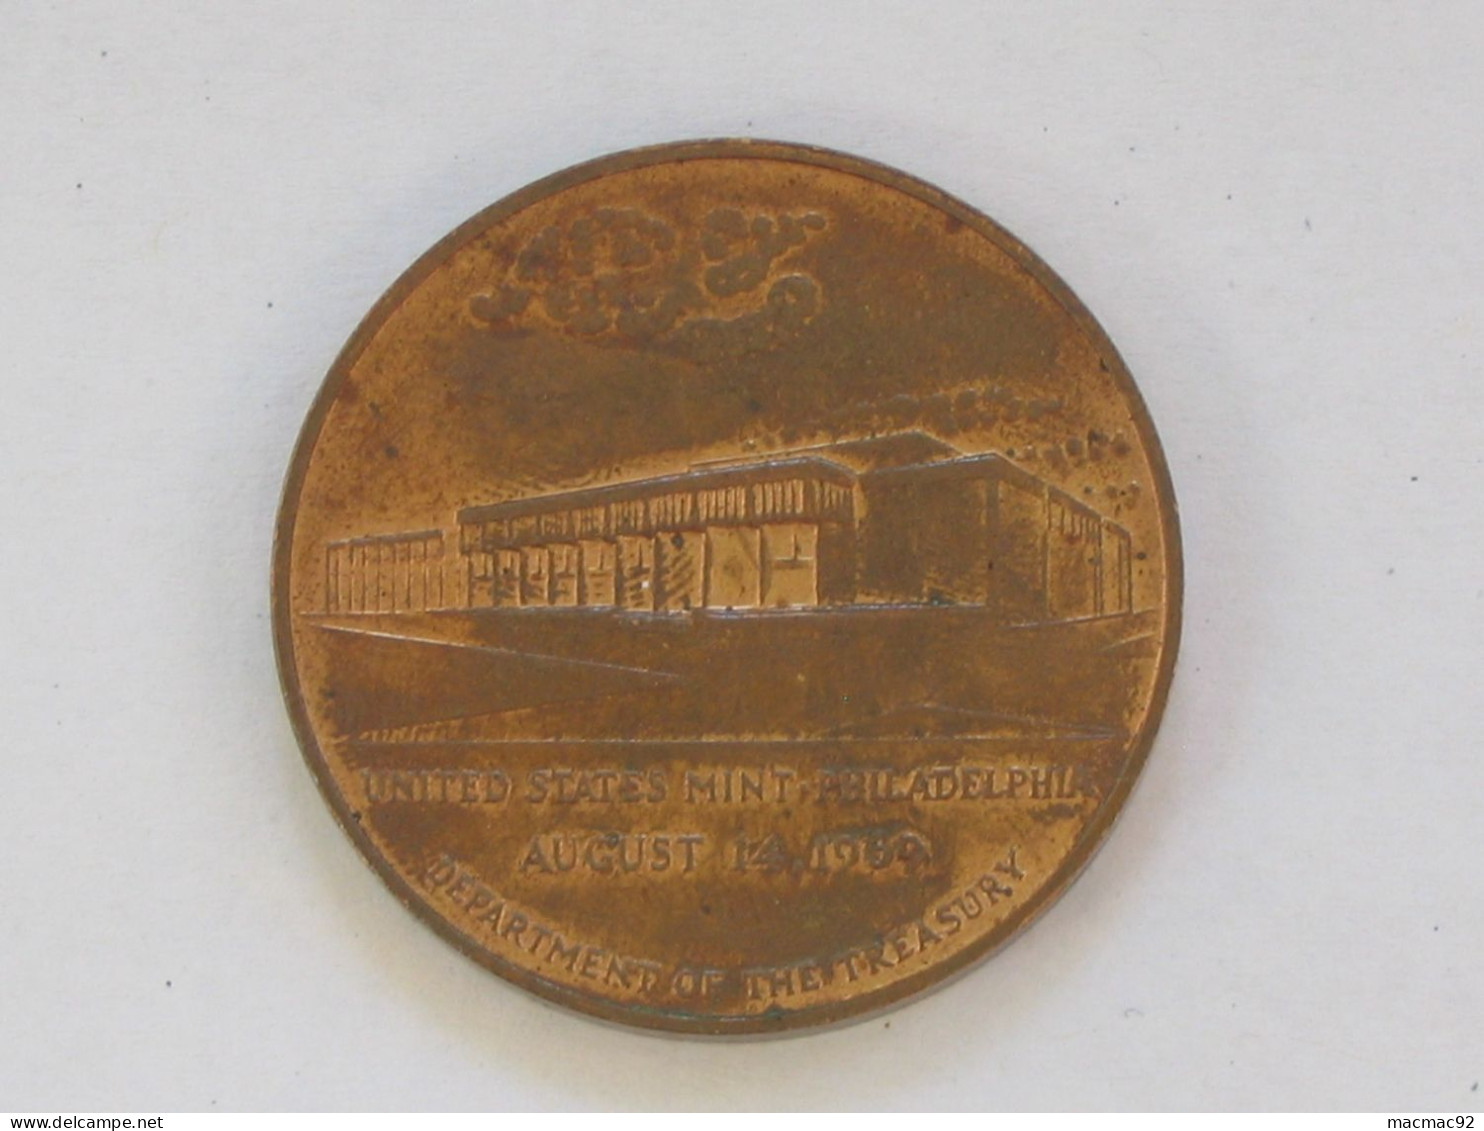 Médaille USA - UNITED STATES MINT - PHLILADELPHIA - August 14.1969  **** EN ACHAT IMMEDIAT **** - Professionals/Firms